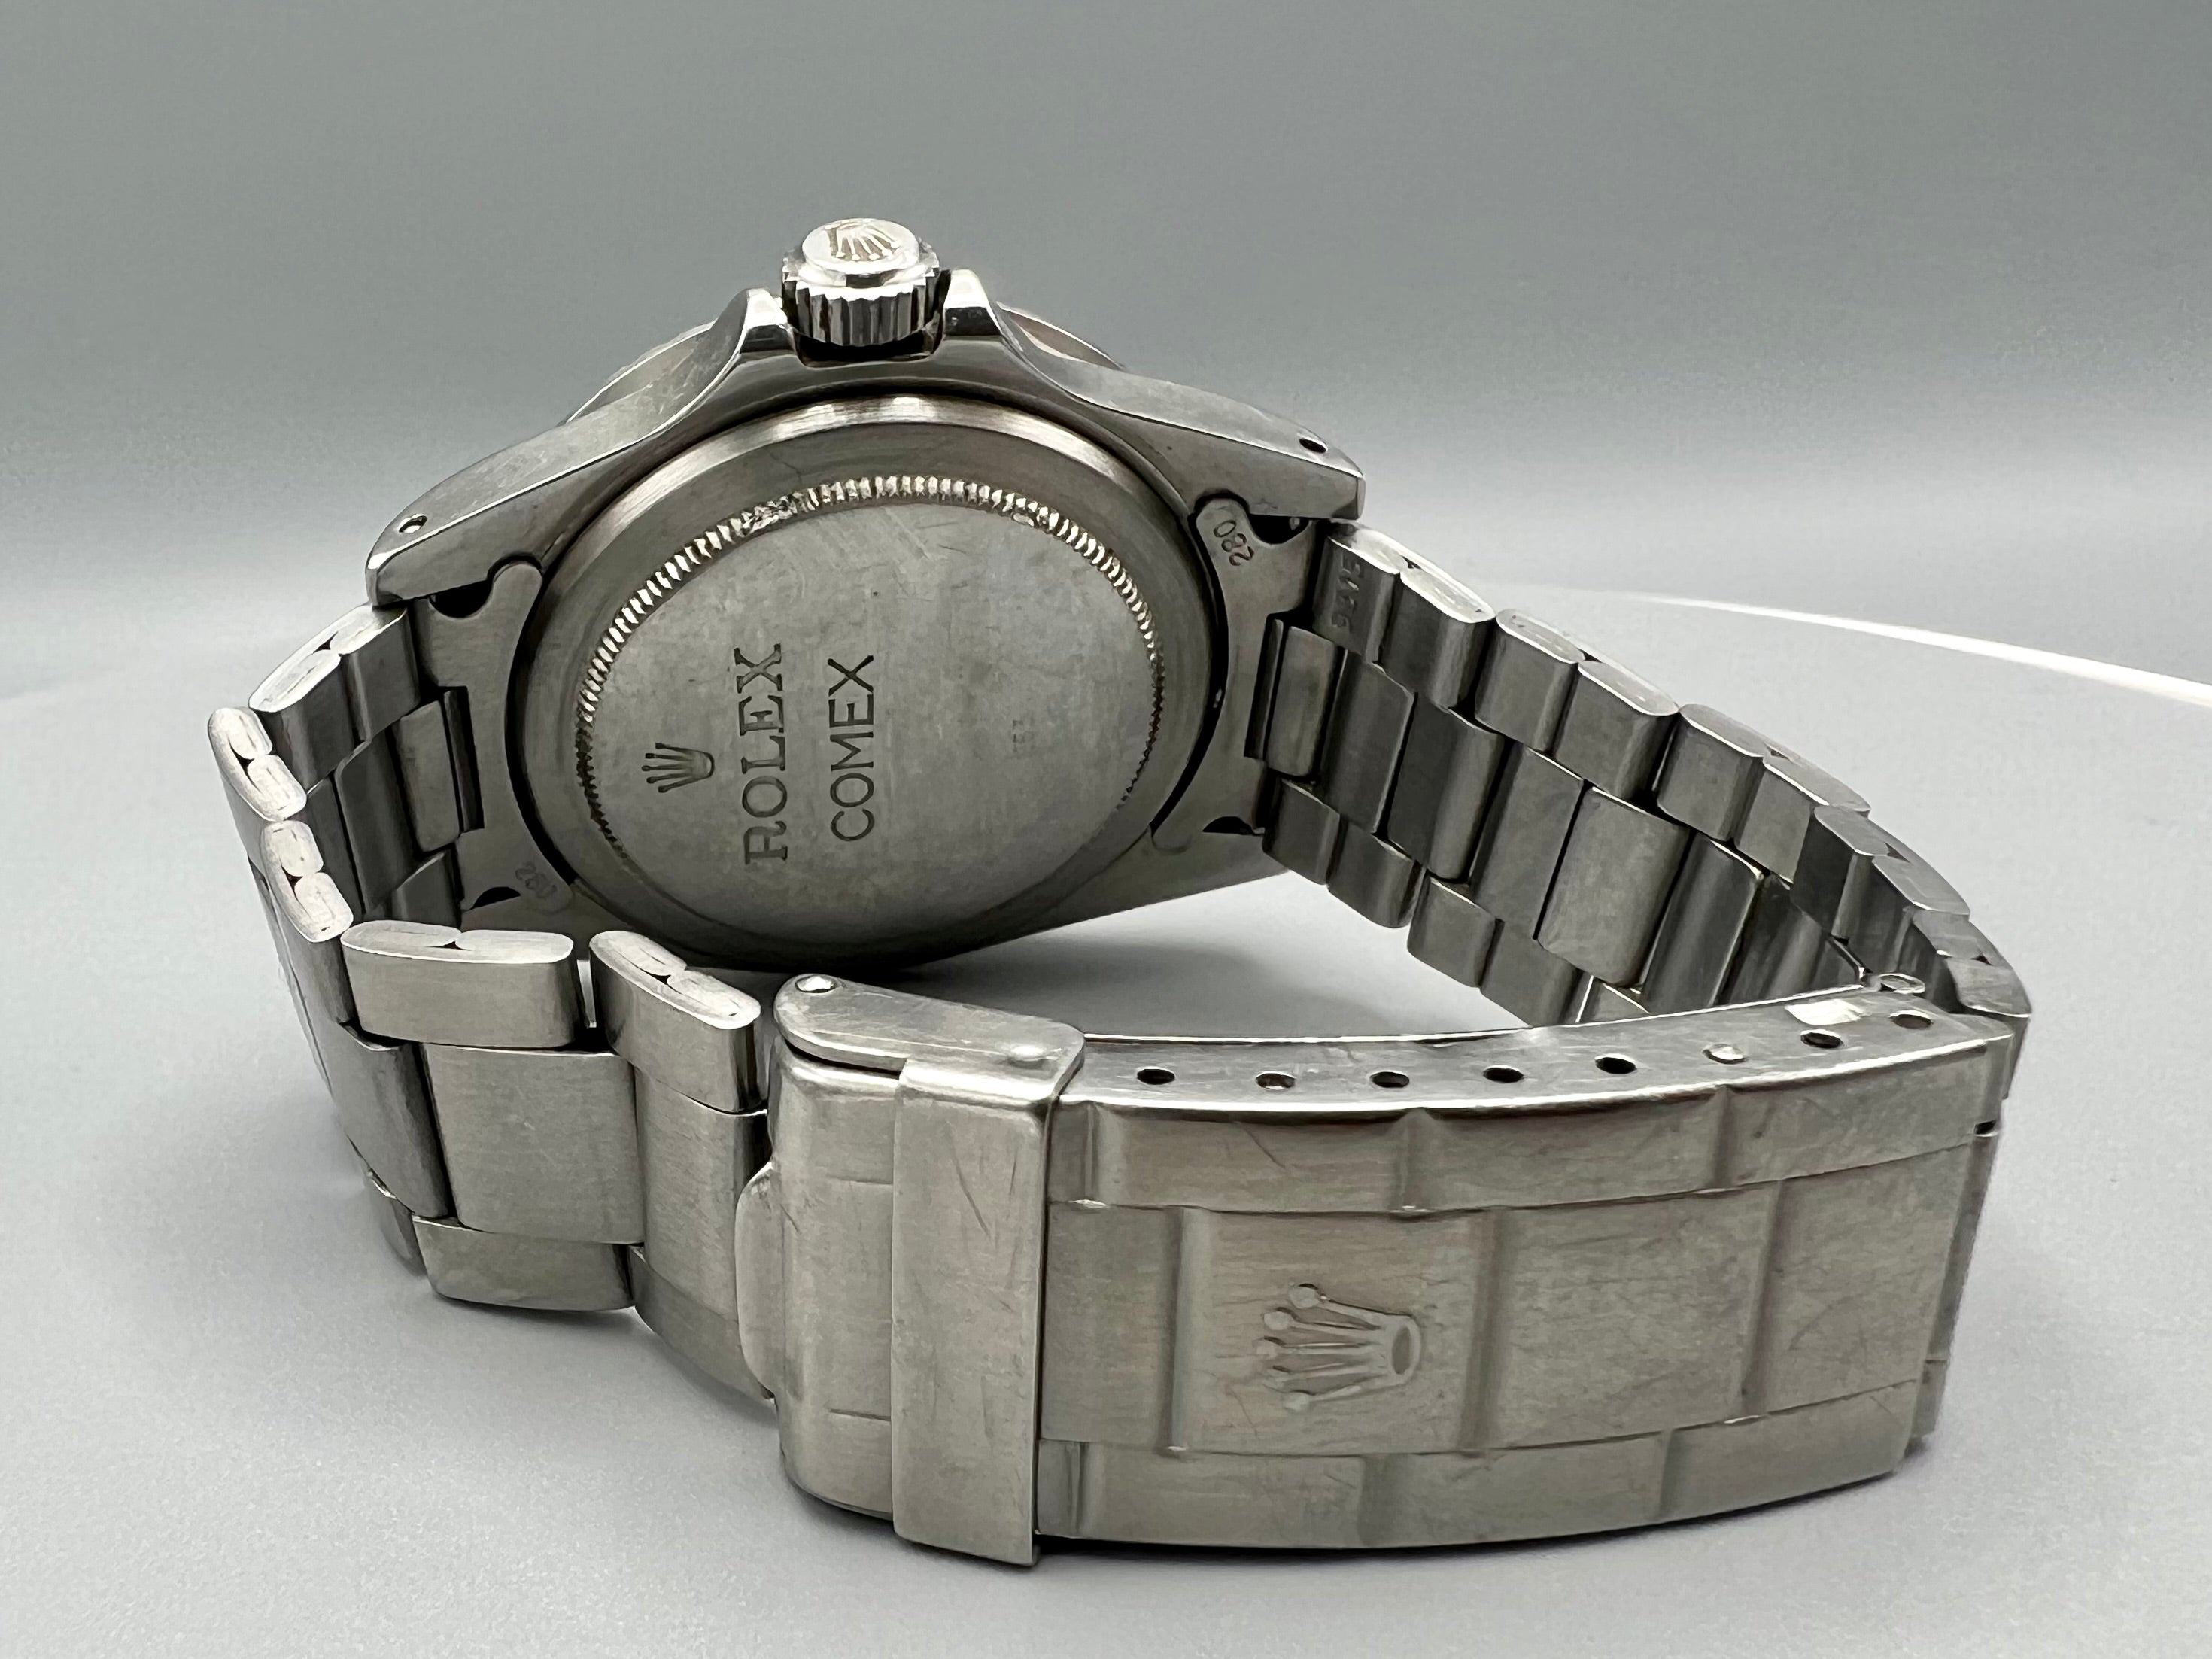 Rolex Diver's Watch could make a Splash - Antique Collecting